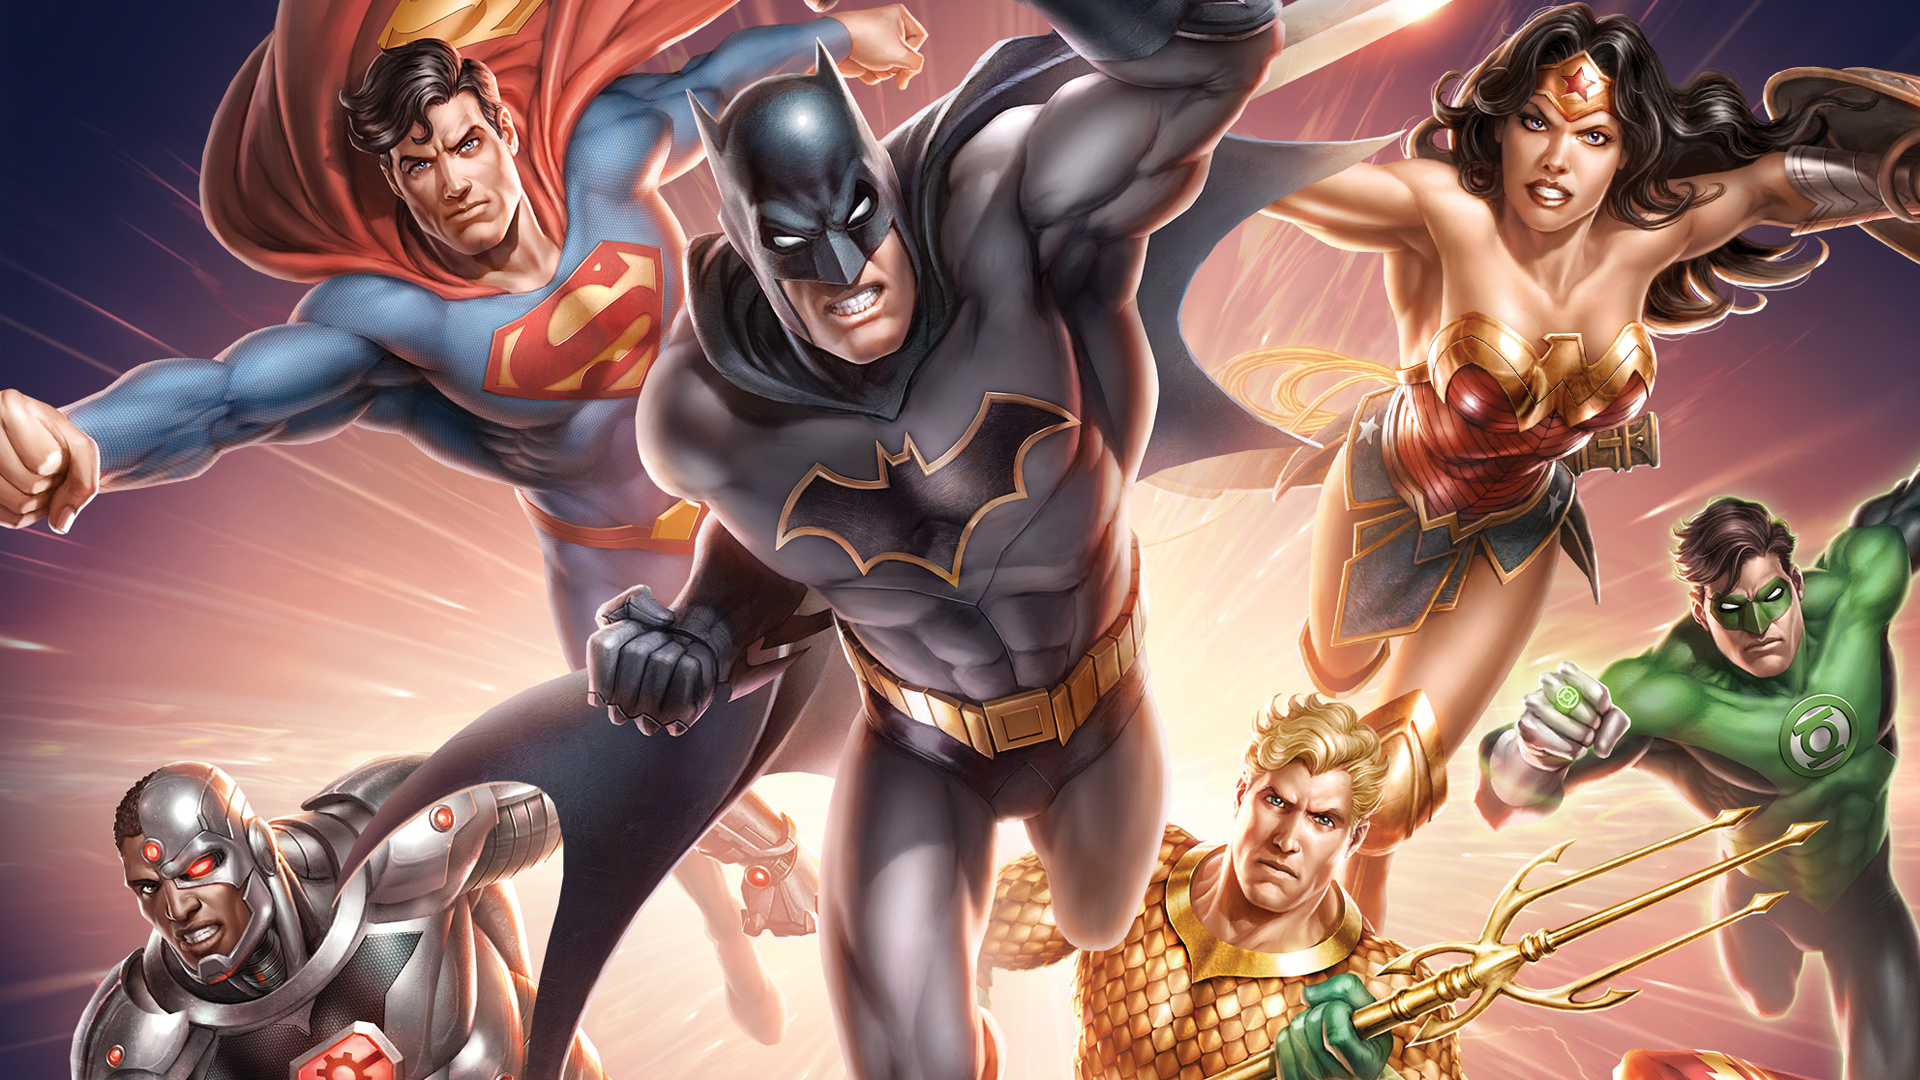 Znamy cenę abonamentu platformy VOD z DC Universe